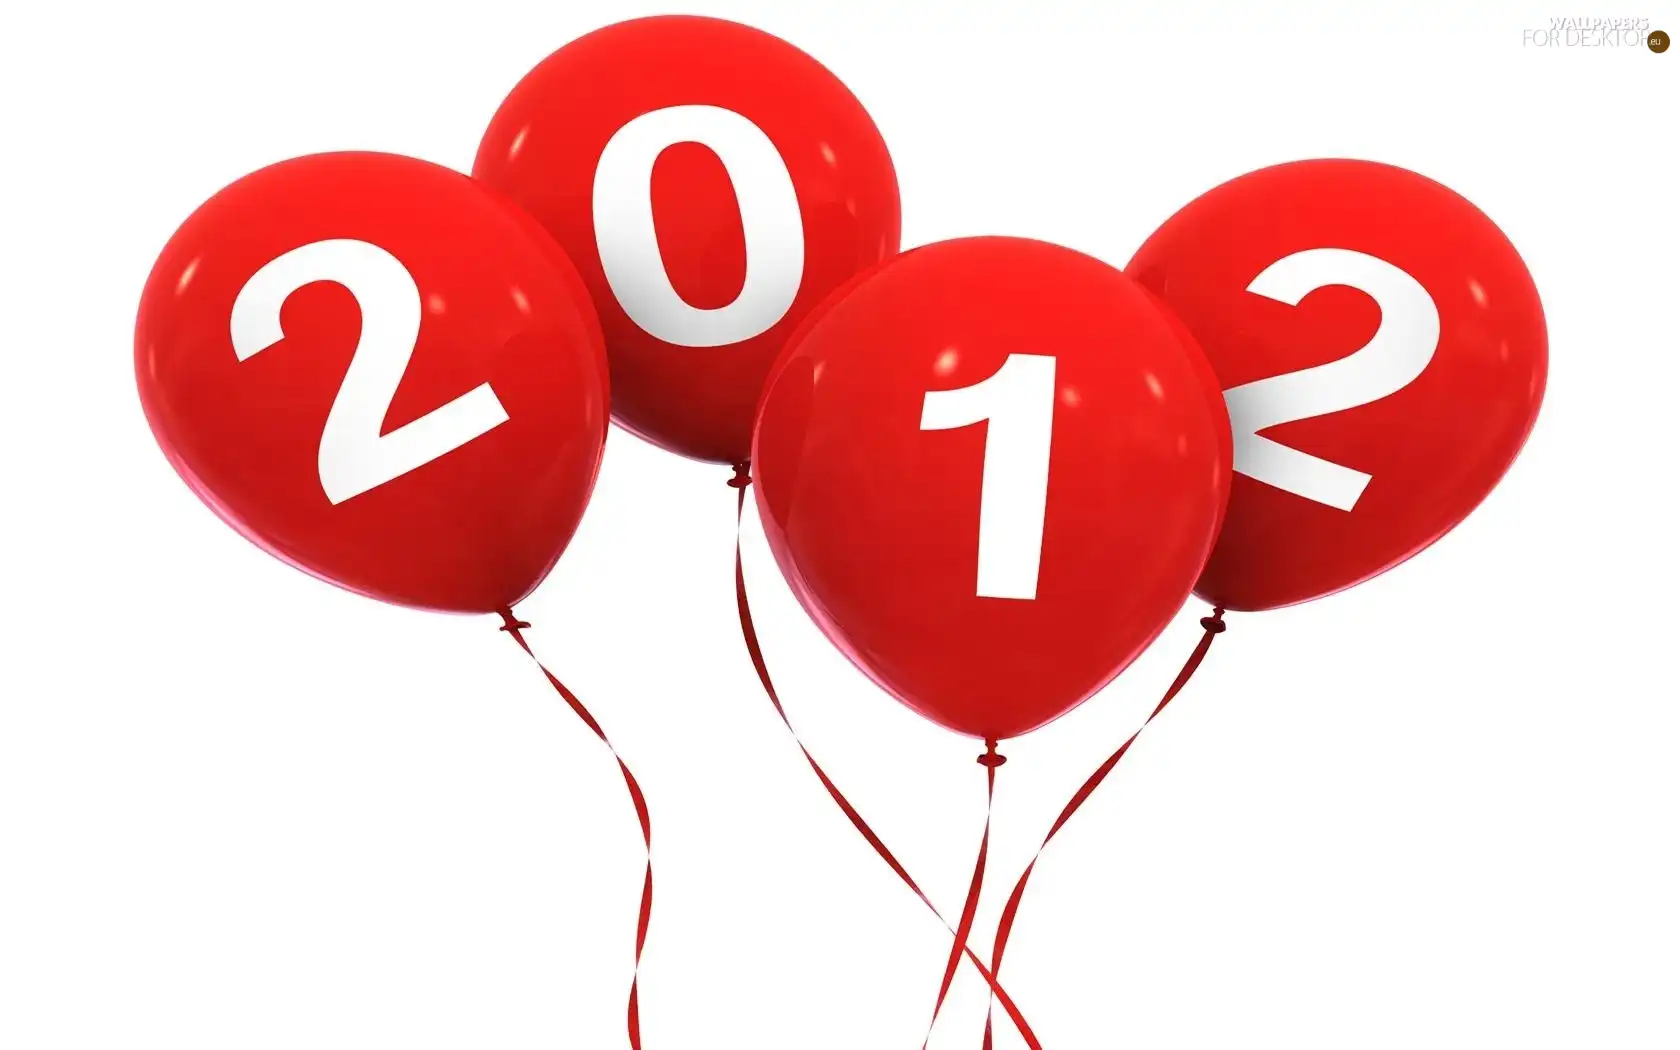 Balloons, Year 2012